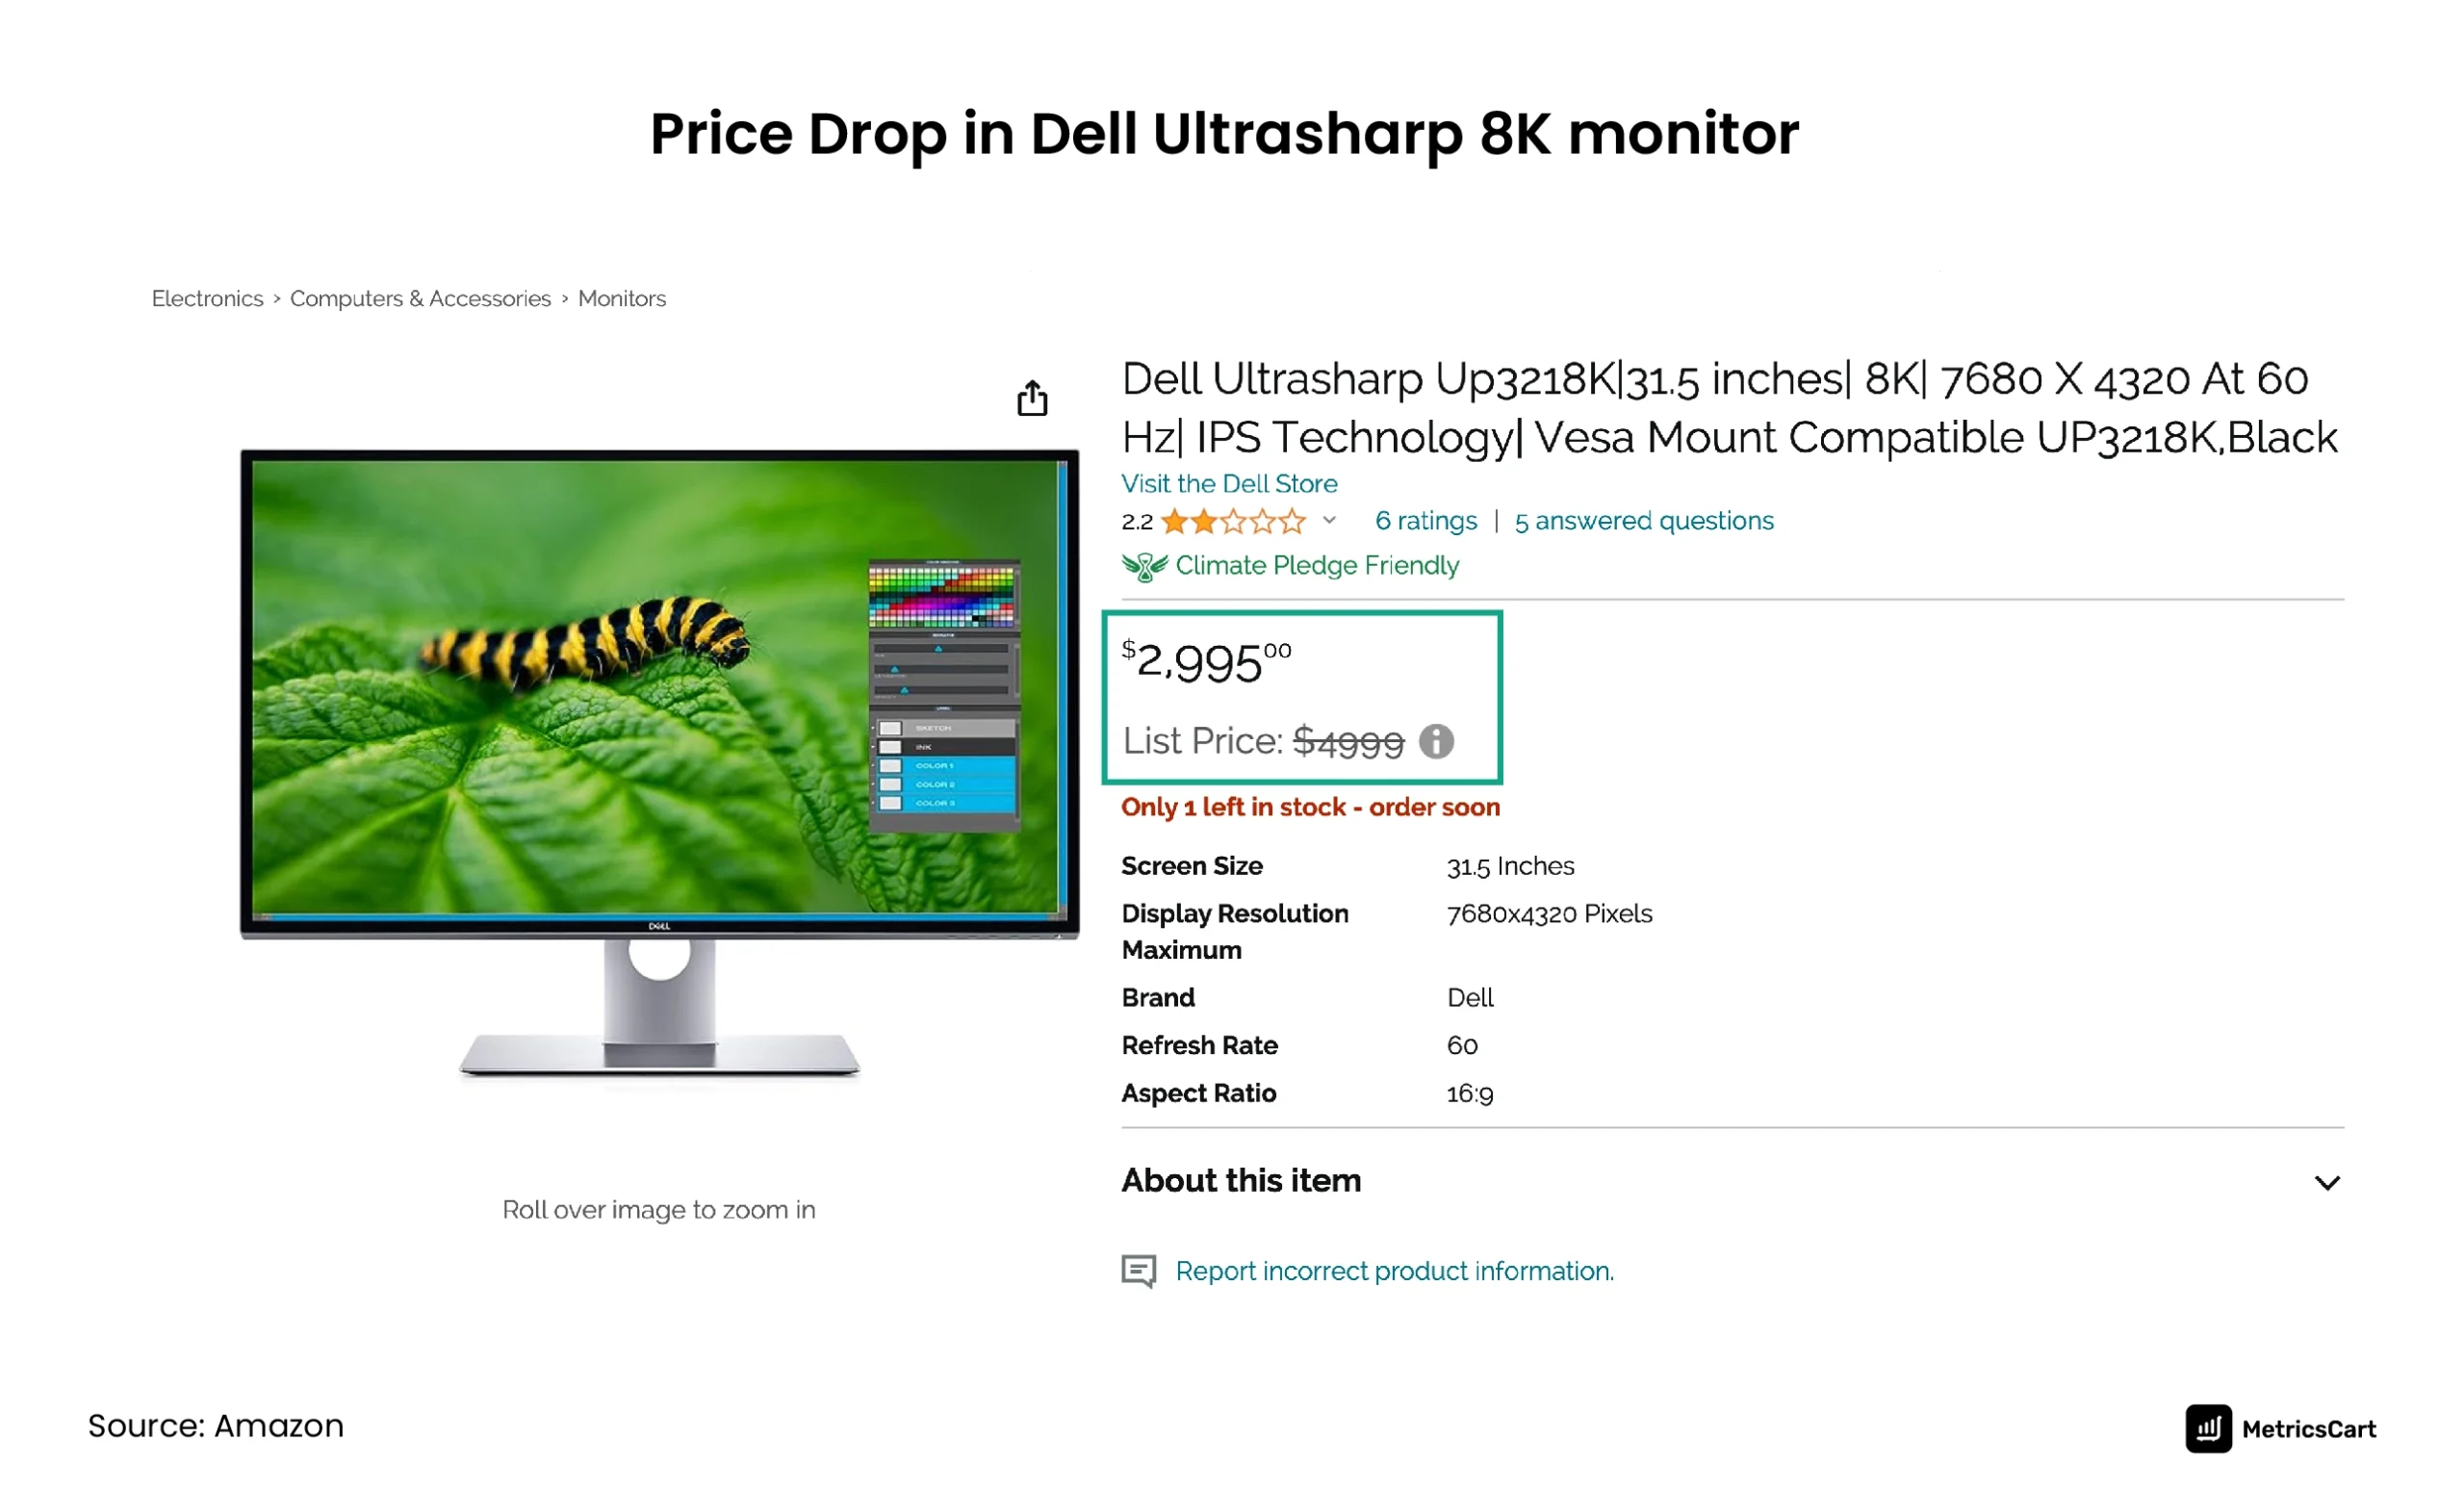 dell 8k monitor skims price